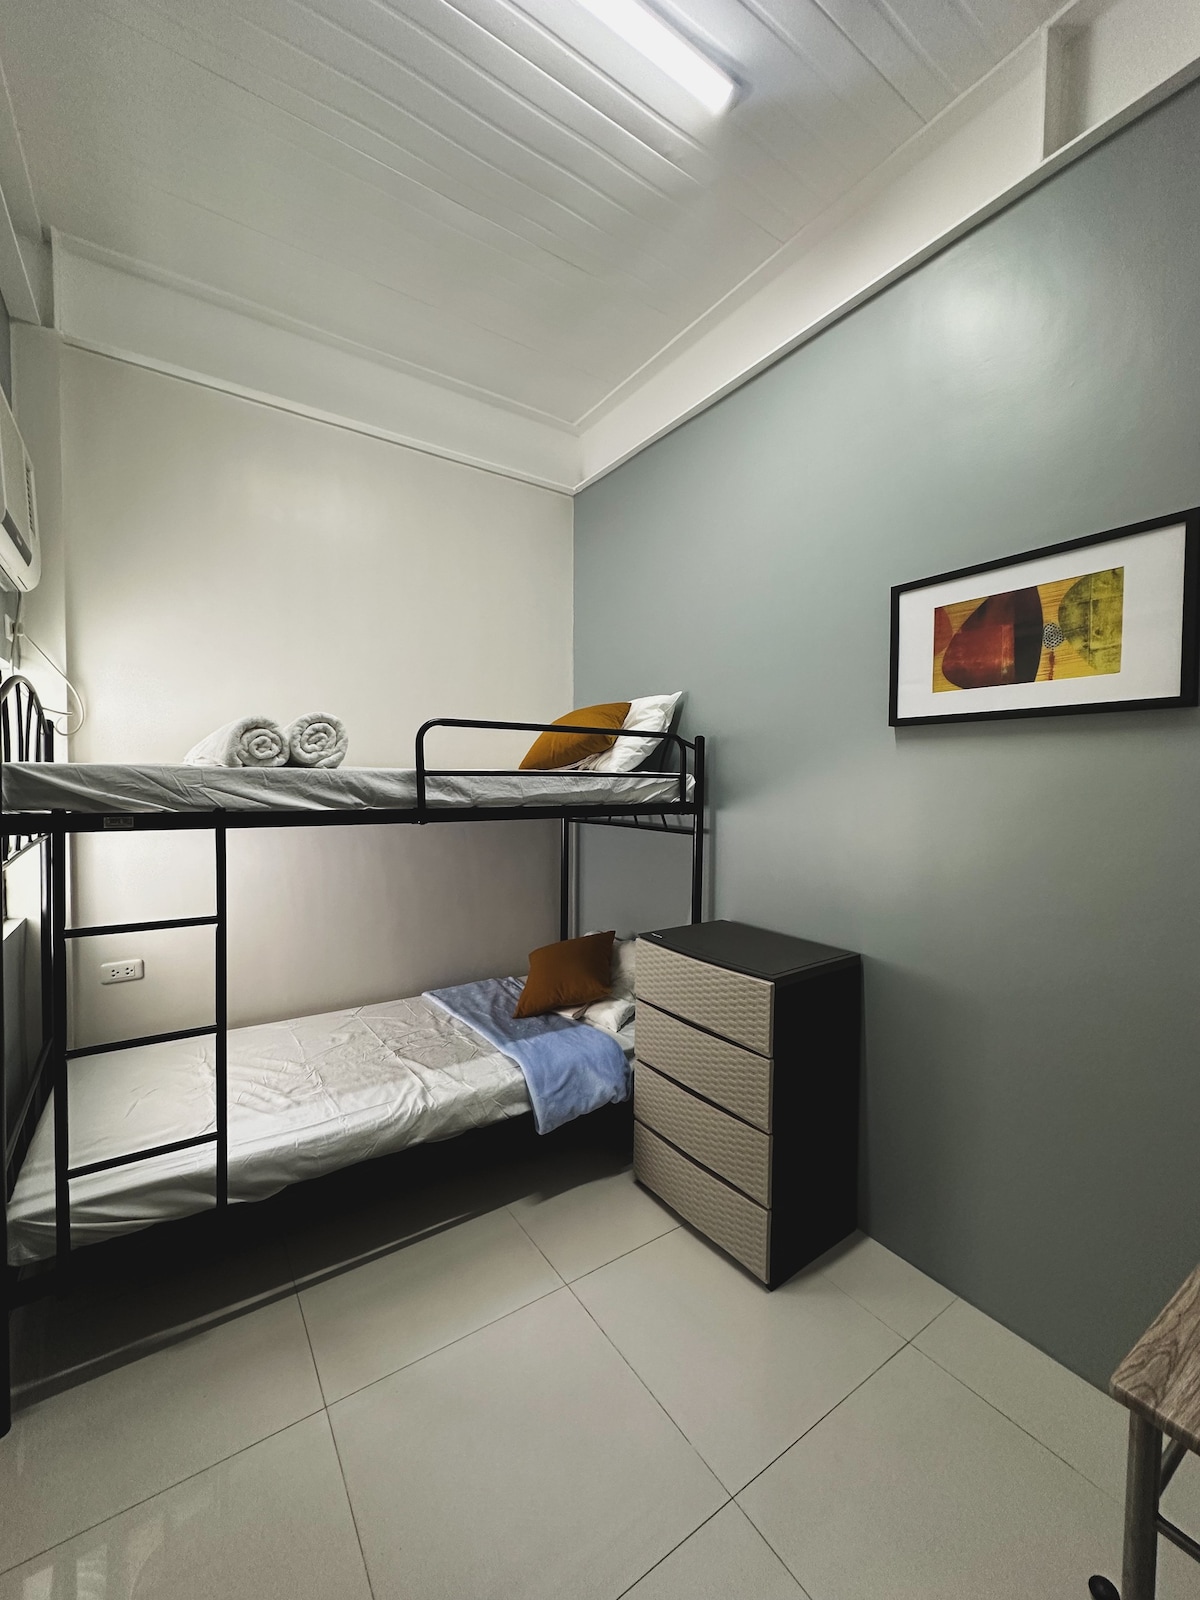 Sergio’s Inn & Suites - Room 10 (Double Deck Room)